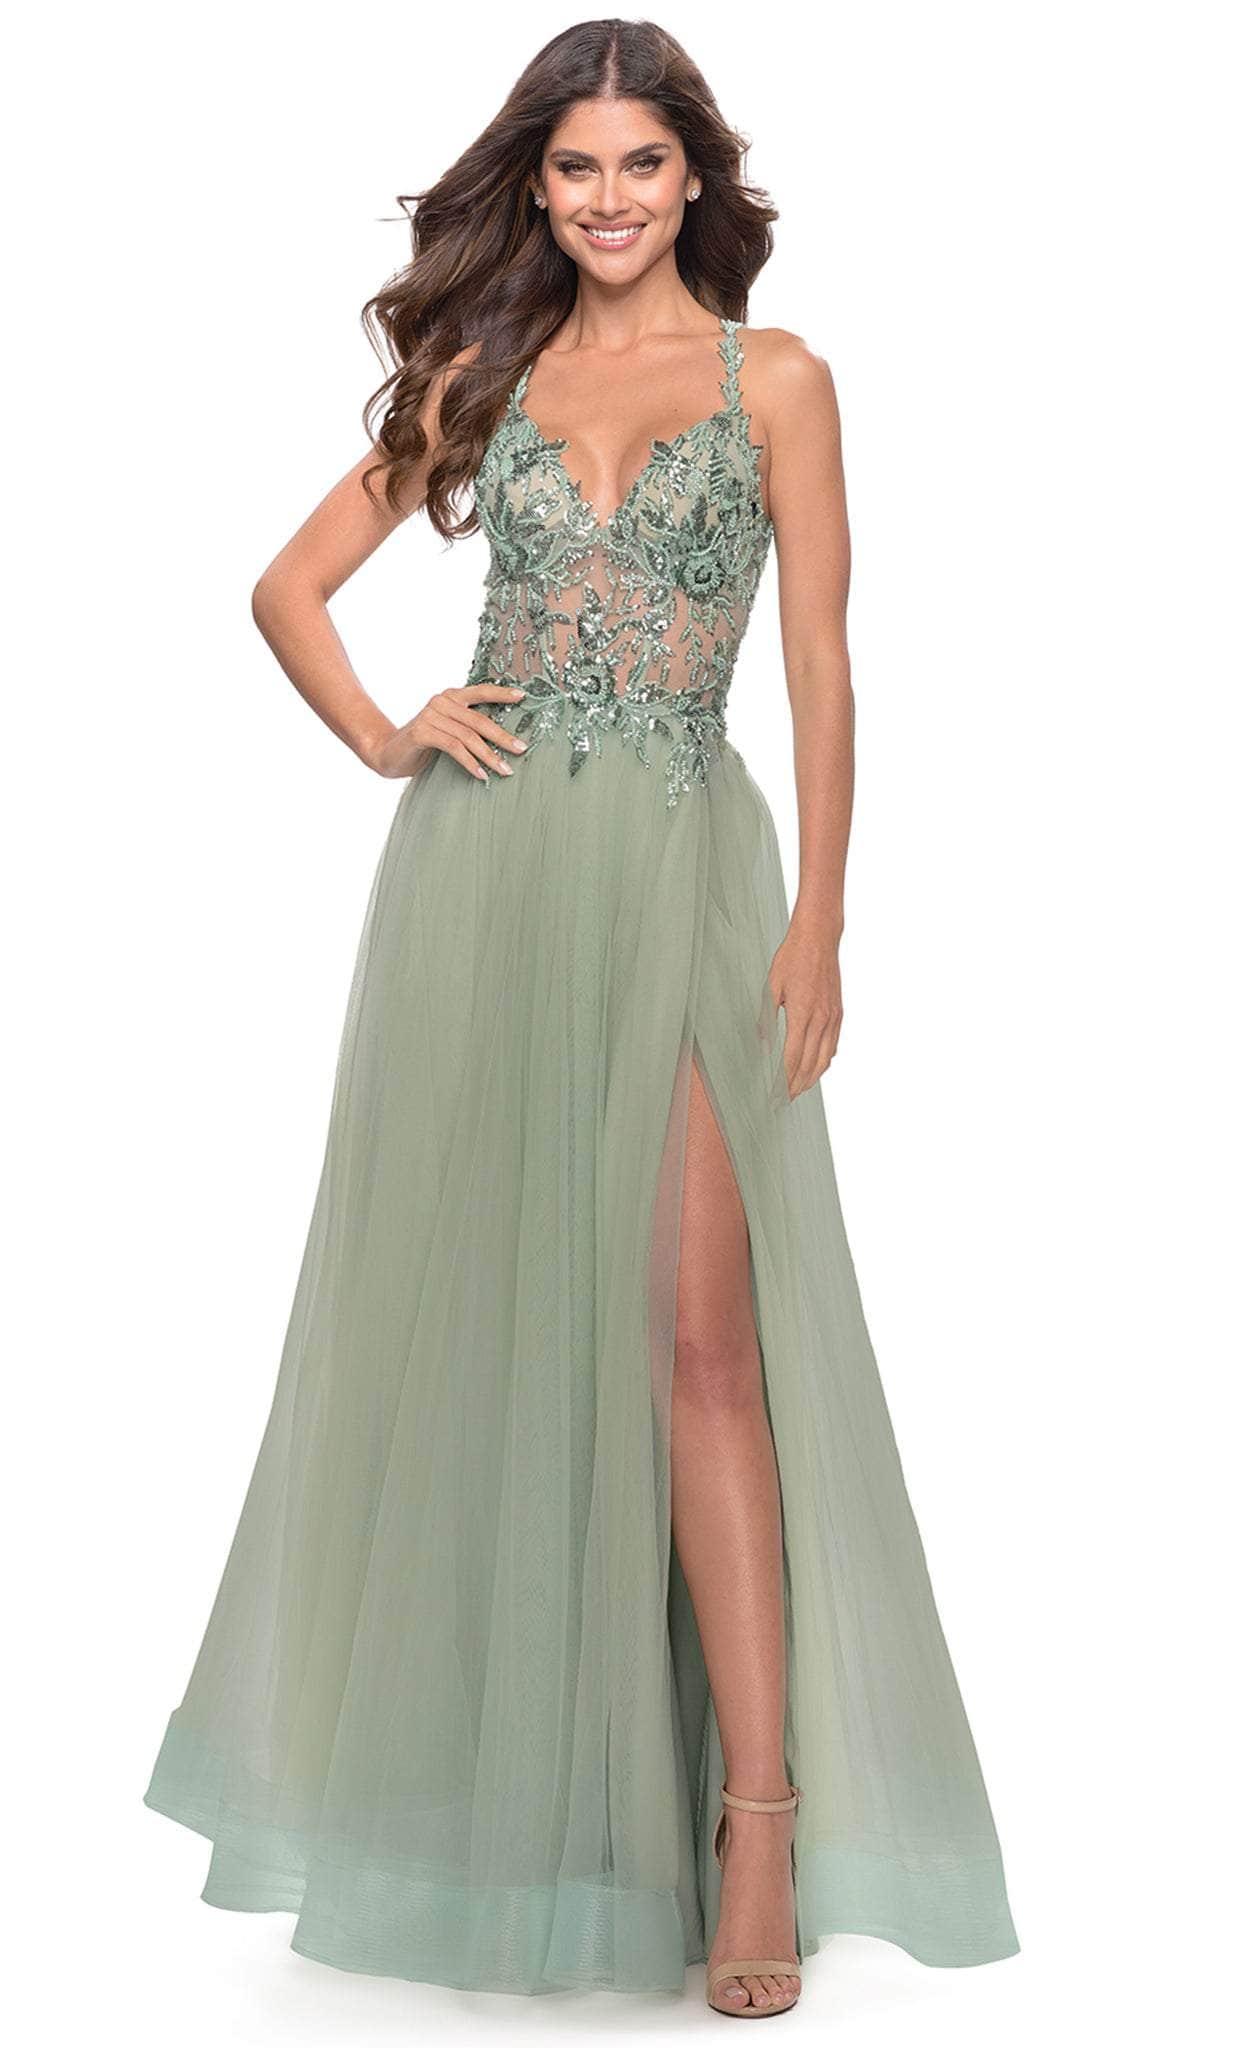 La Femme 31369 - Sleeveless Sheer Bodice Prom Dress
